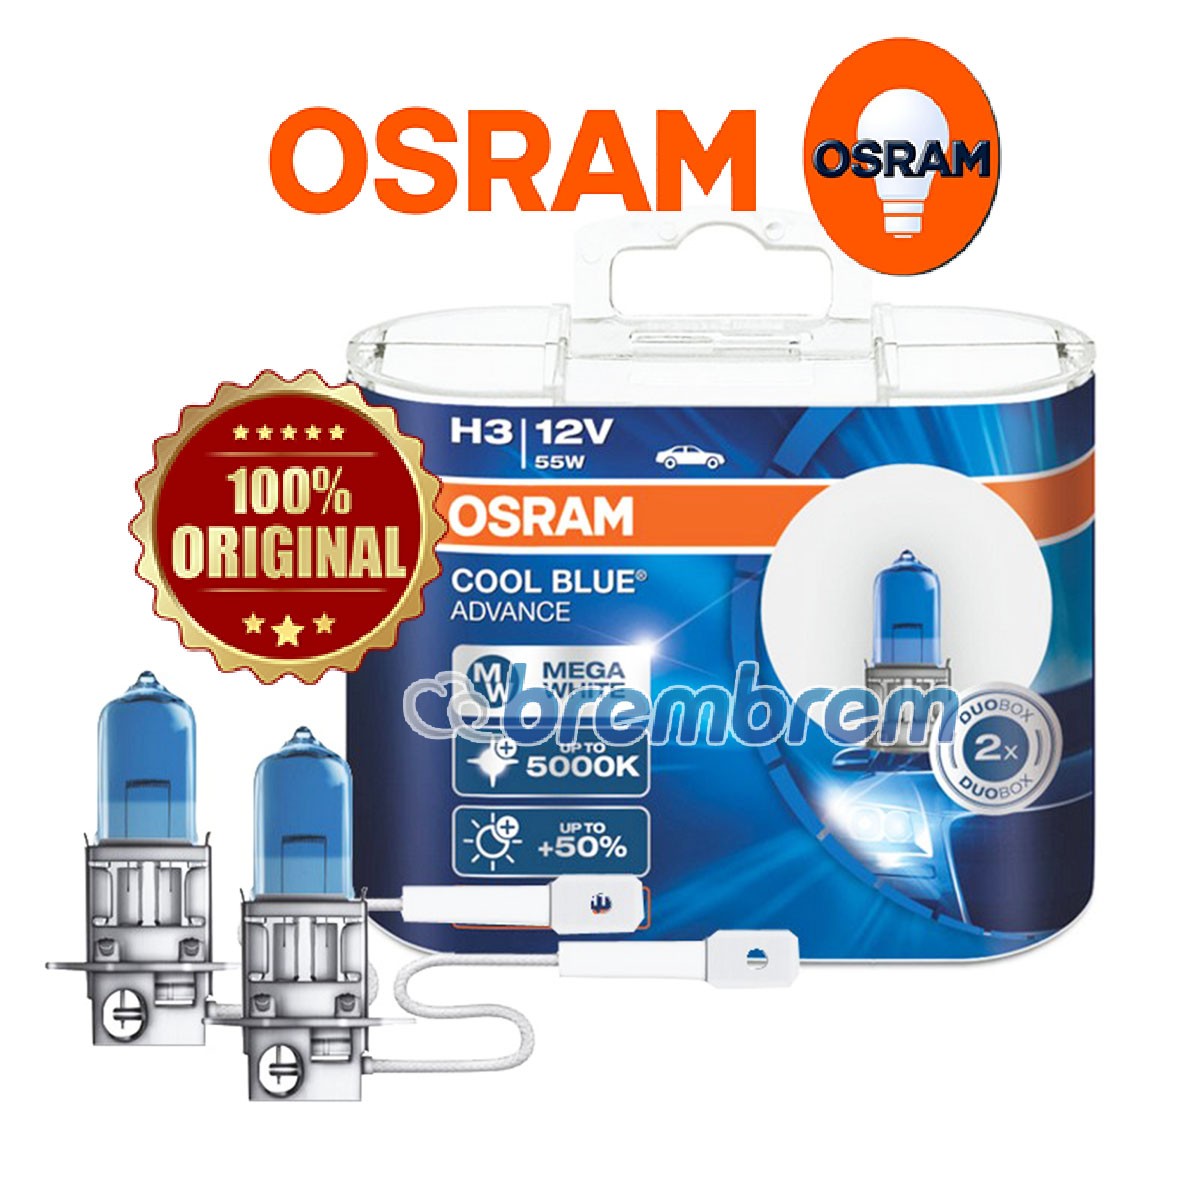 OSRAM COOL BLUE ADVANCE H3 (5000K) - LAMPU HALOGEN